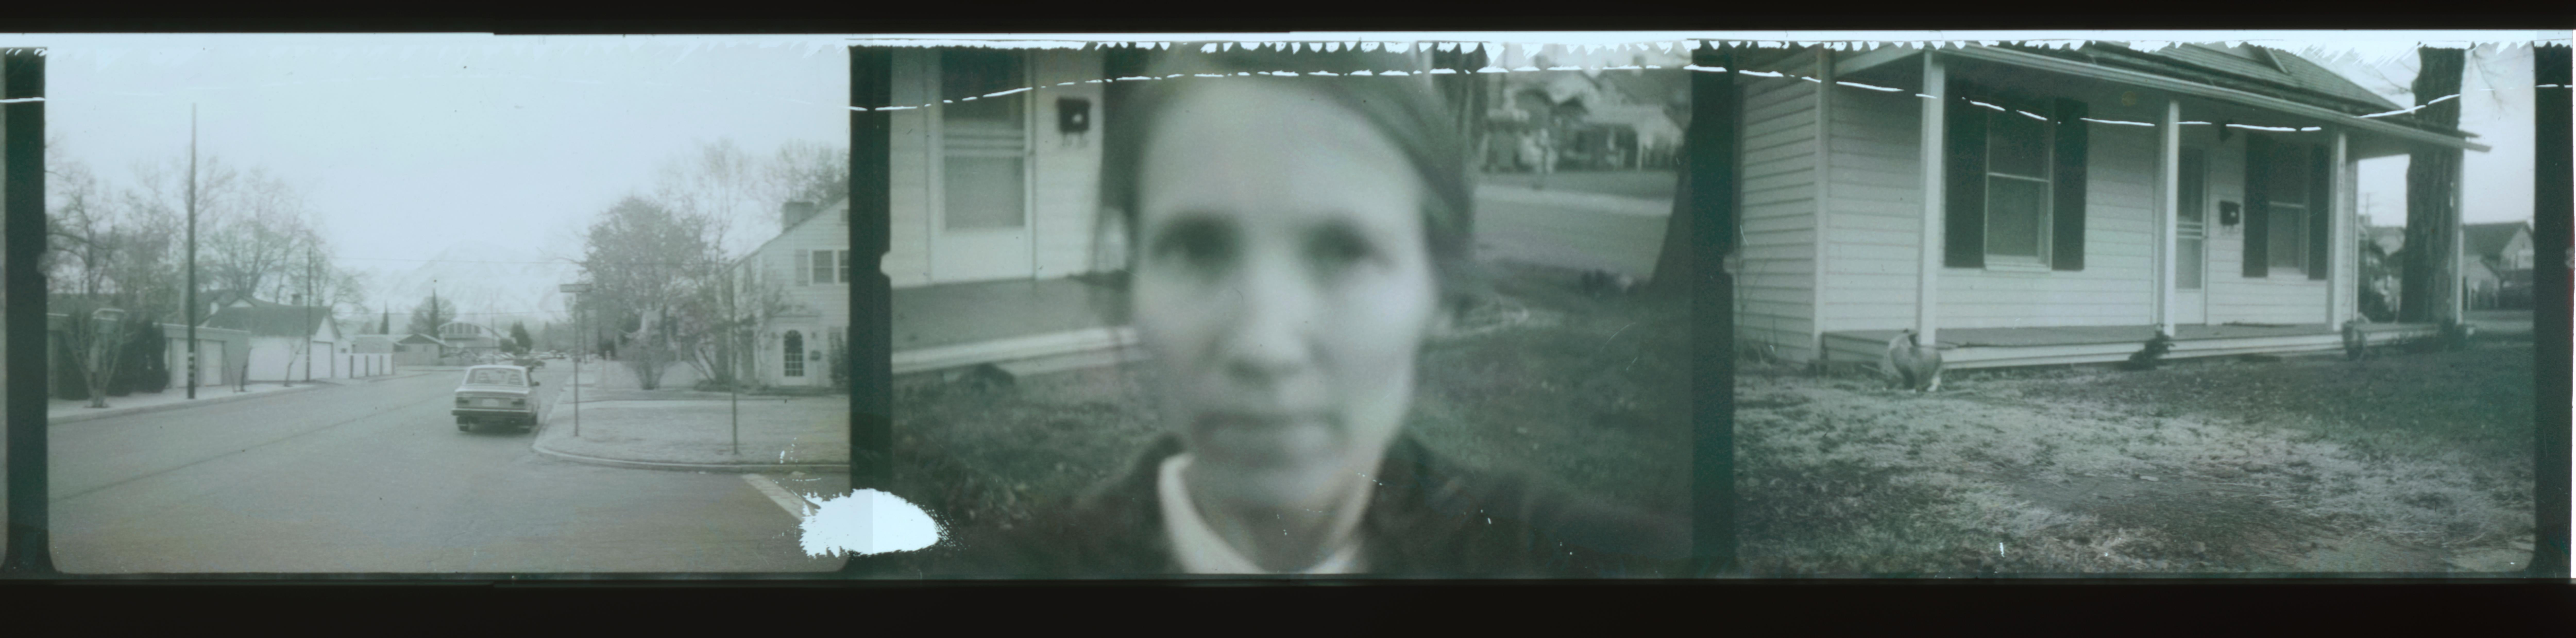 Stefanie Schneider Black and White Photograph - My own private Travel Diary - Bishop, CA - Walking Lulu - triptych